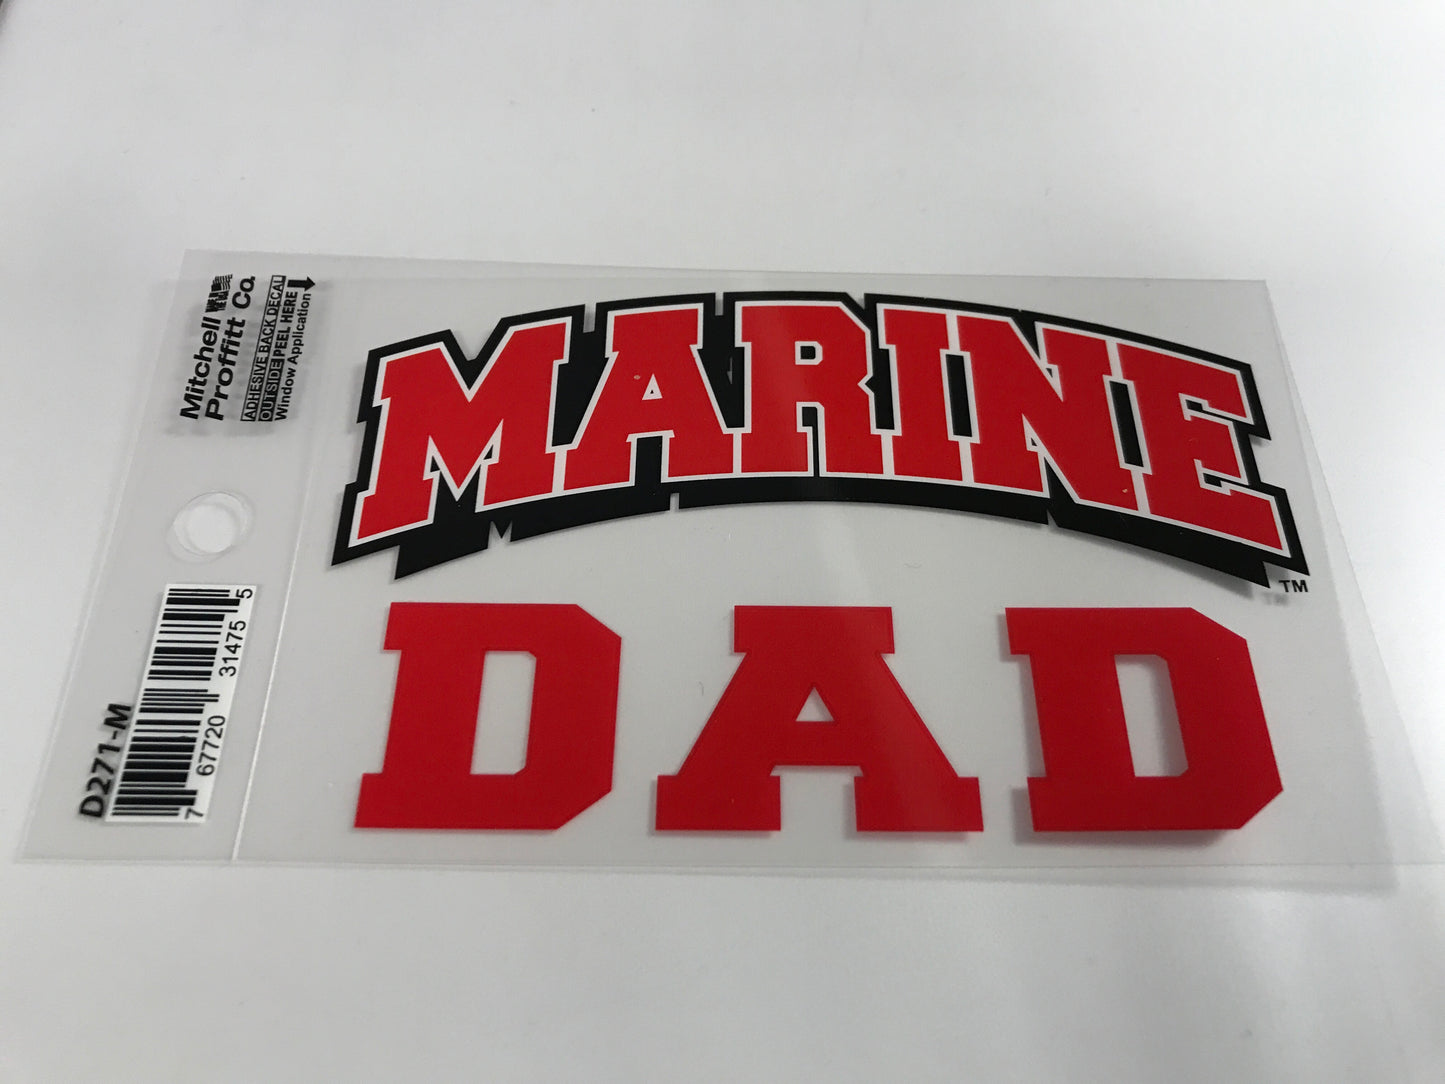 Marine Dad Decal